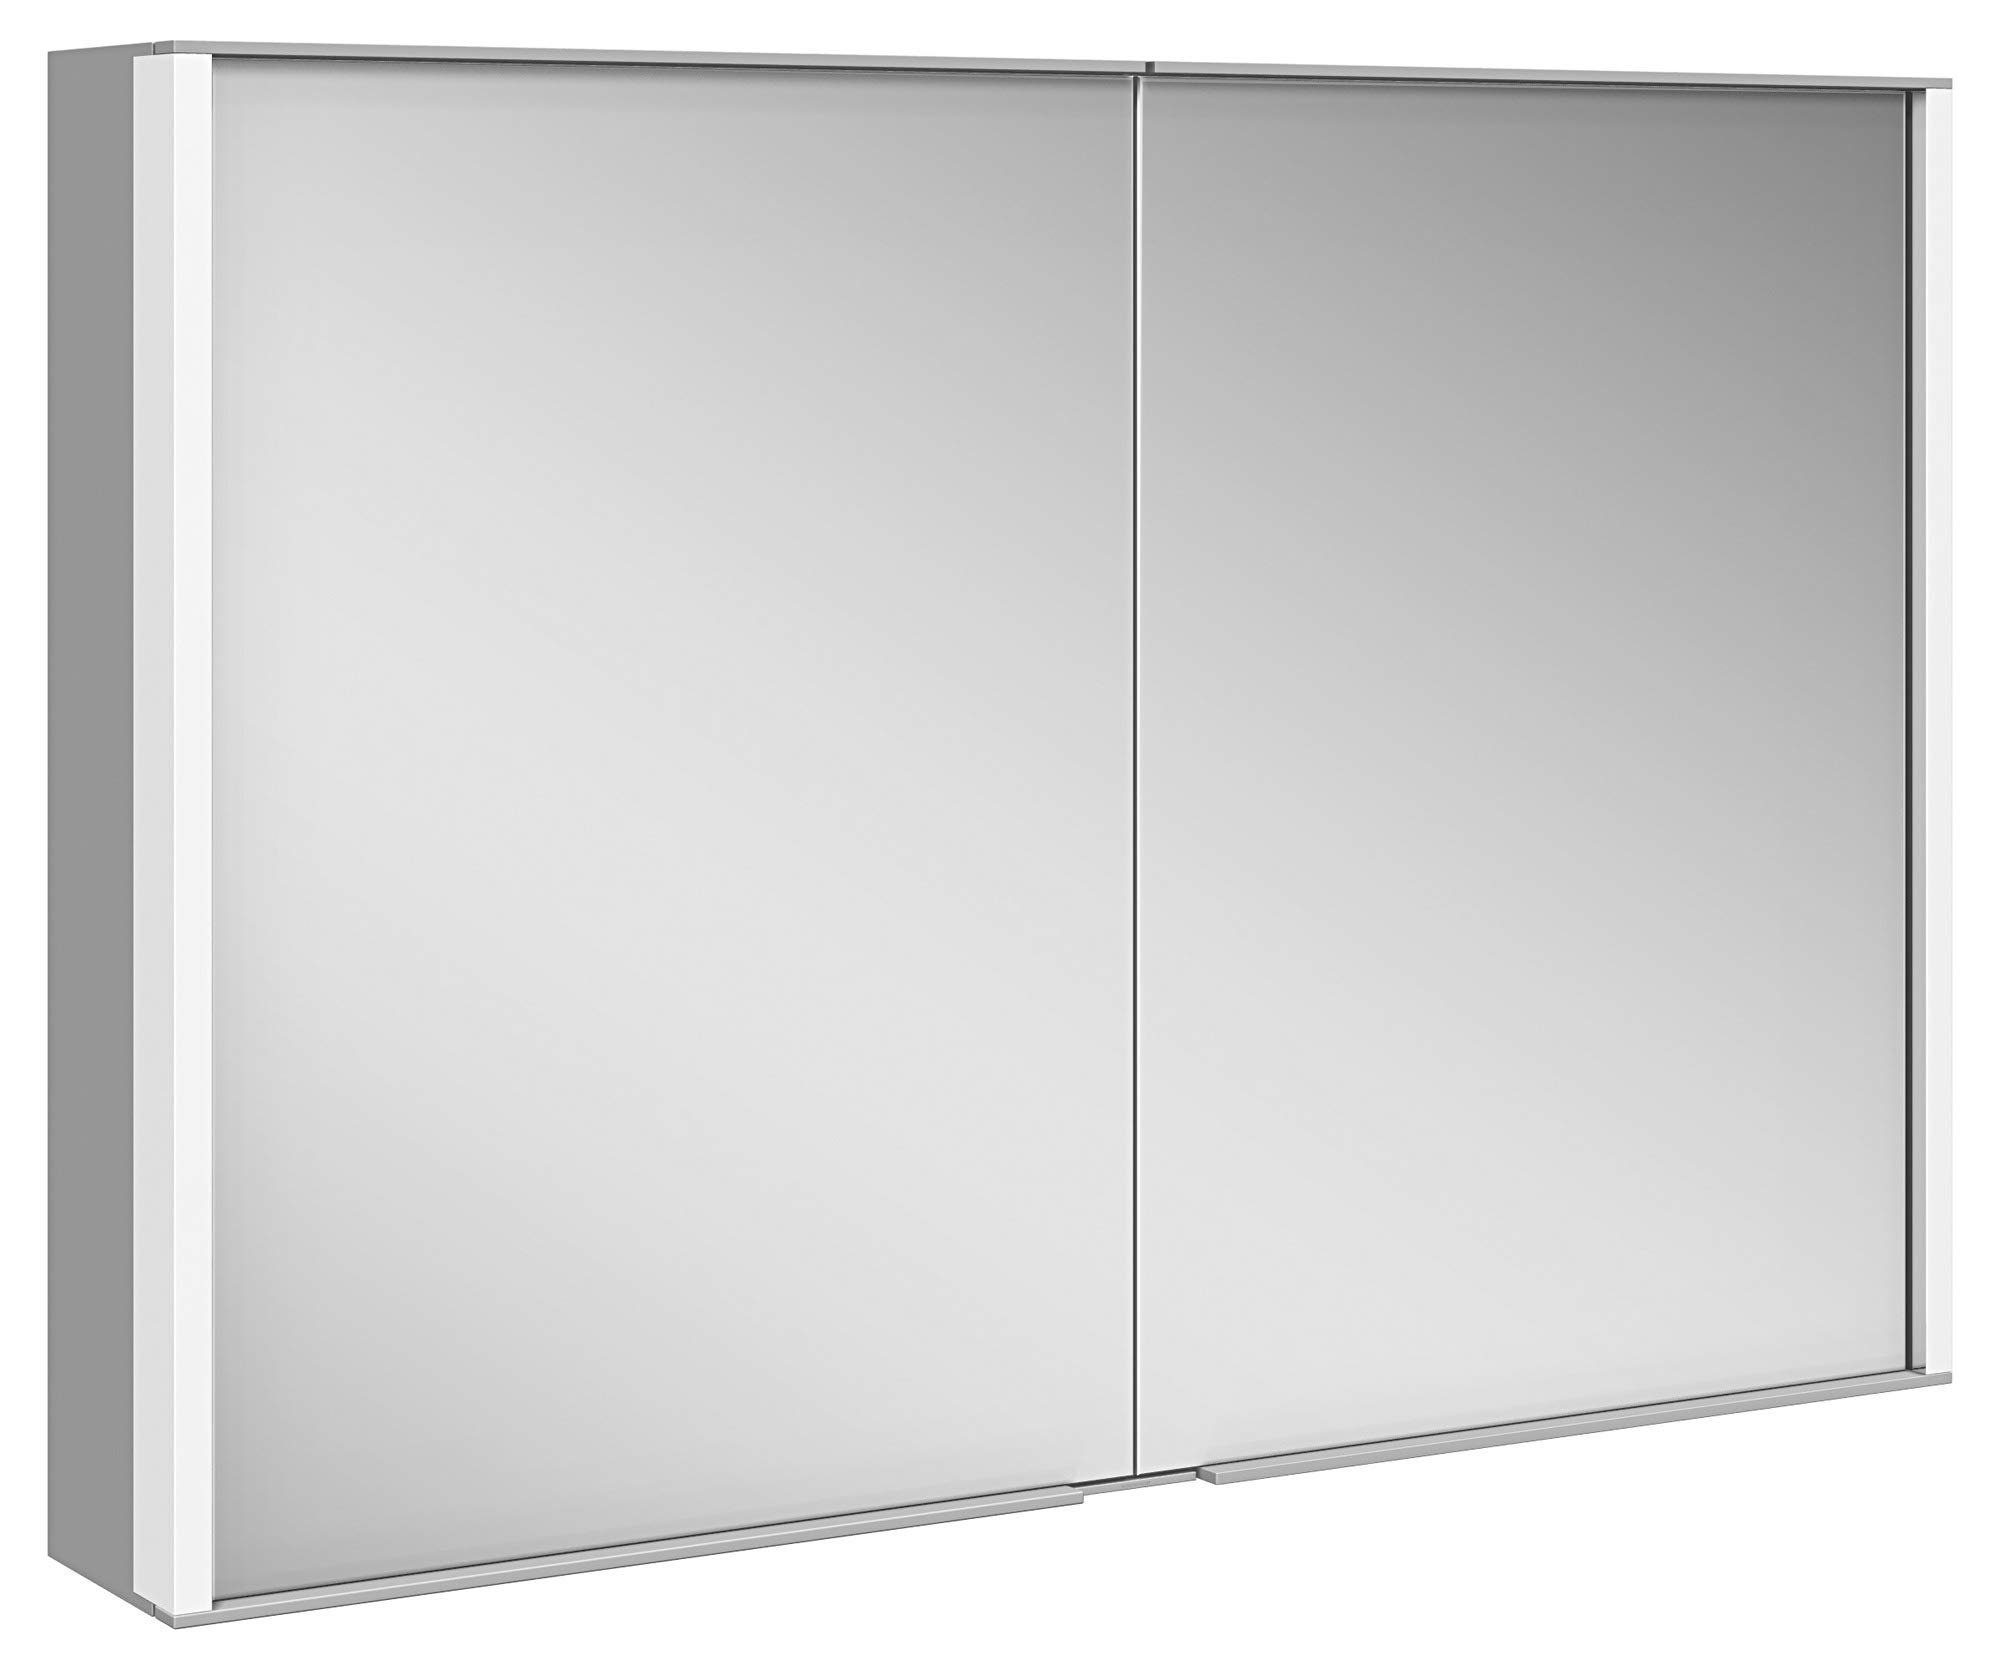 Keuco Spiegelschrank Royal Match (Badezimmerspiegelschrank mit Beleuchtung  LED) mit Steckdose, dimmbar, Aluminium-Korpus, 2-türig, 100 cm